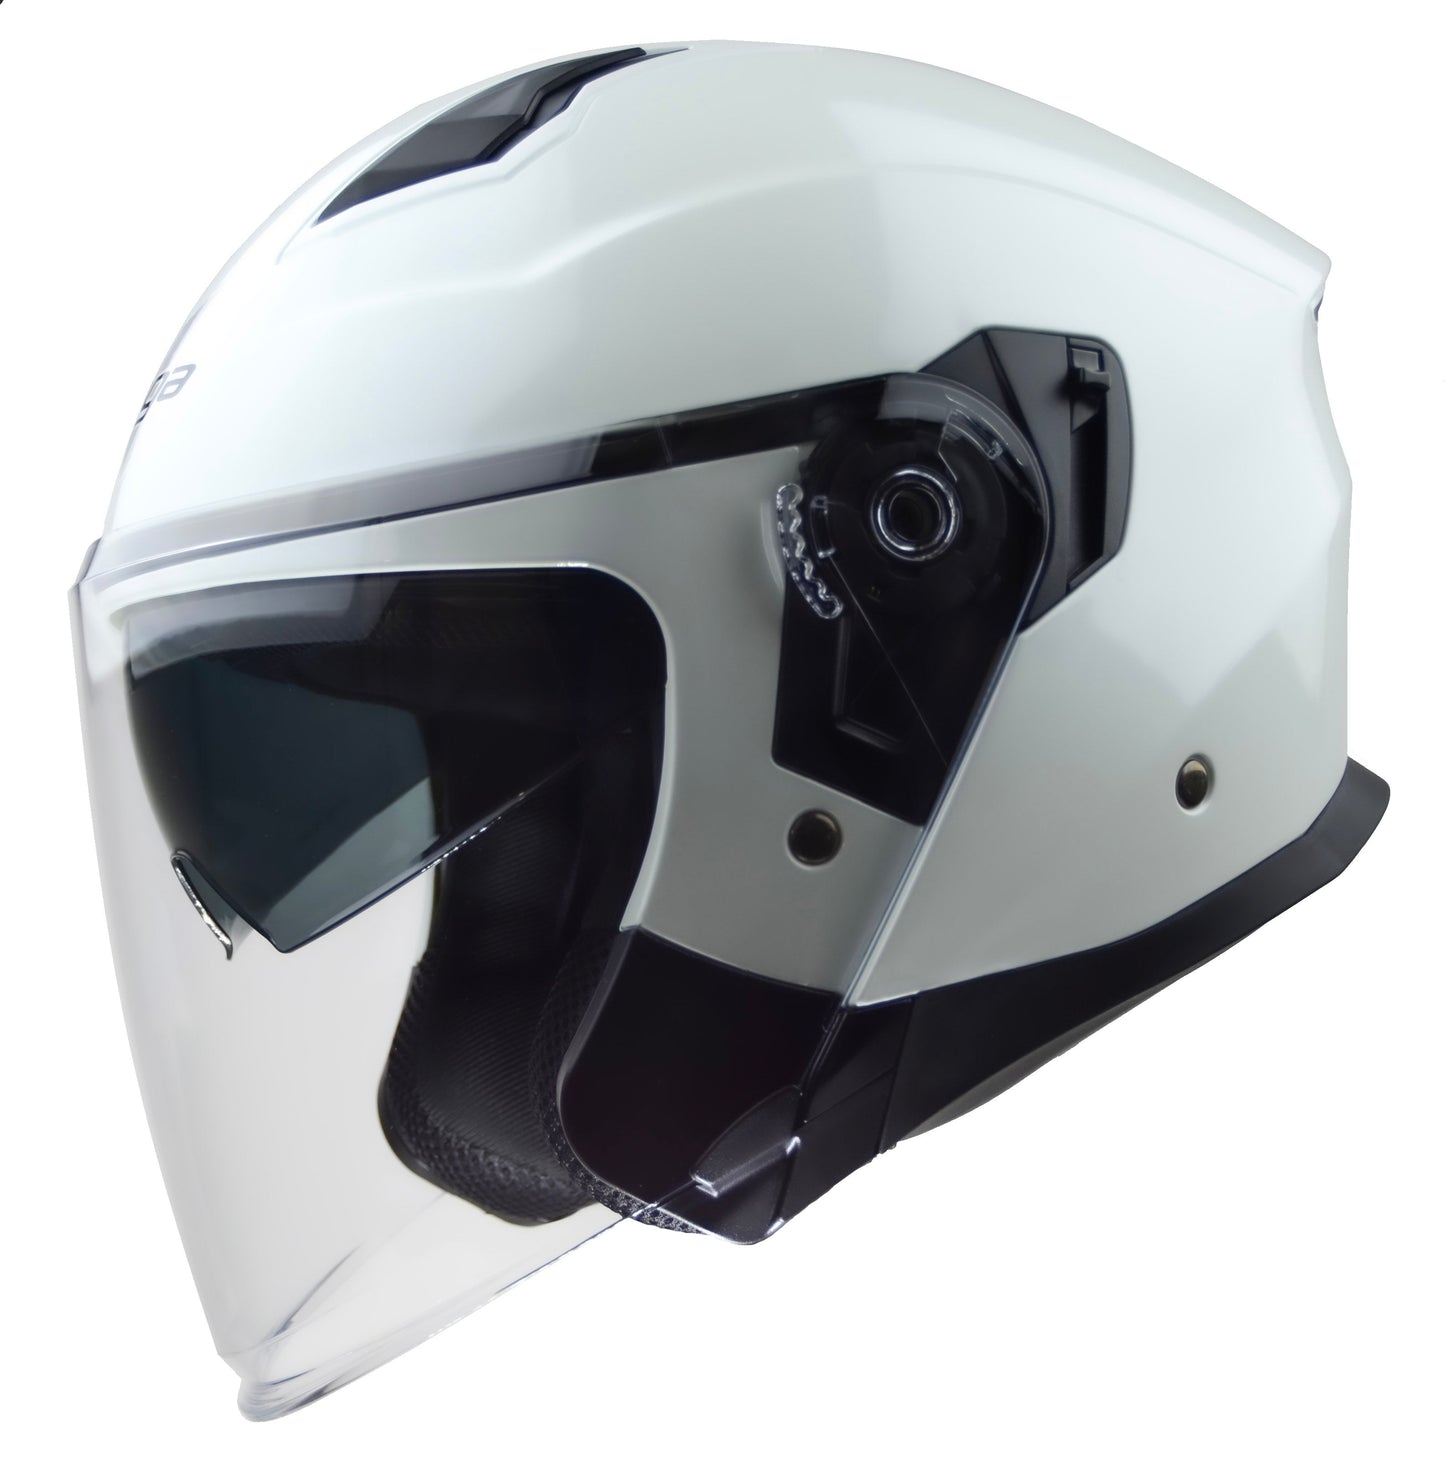 Vega Helmet USA - Magna Touring Helmet - DOT & ECE Safety - Silver